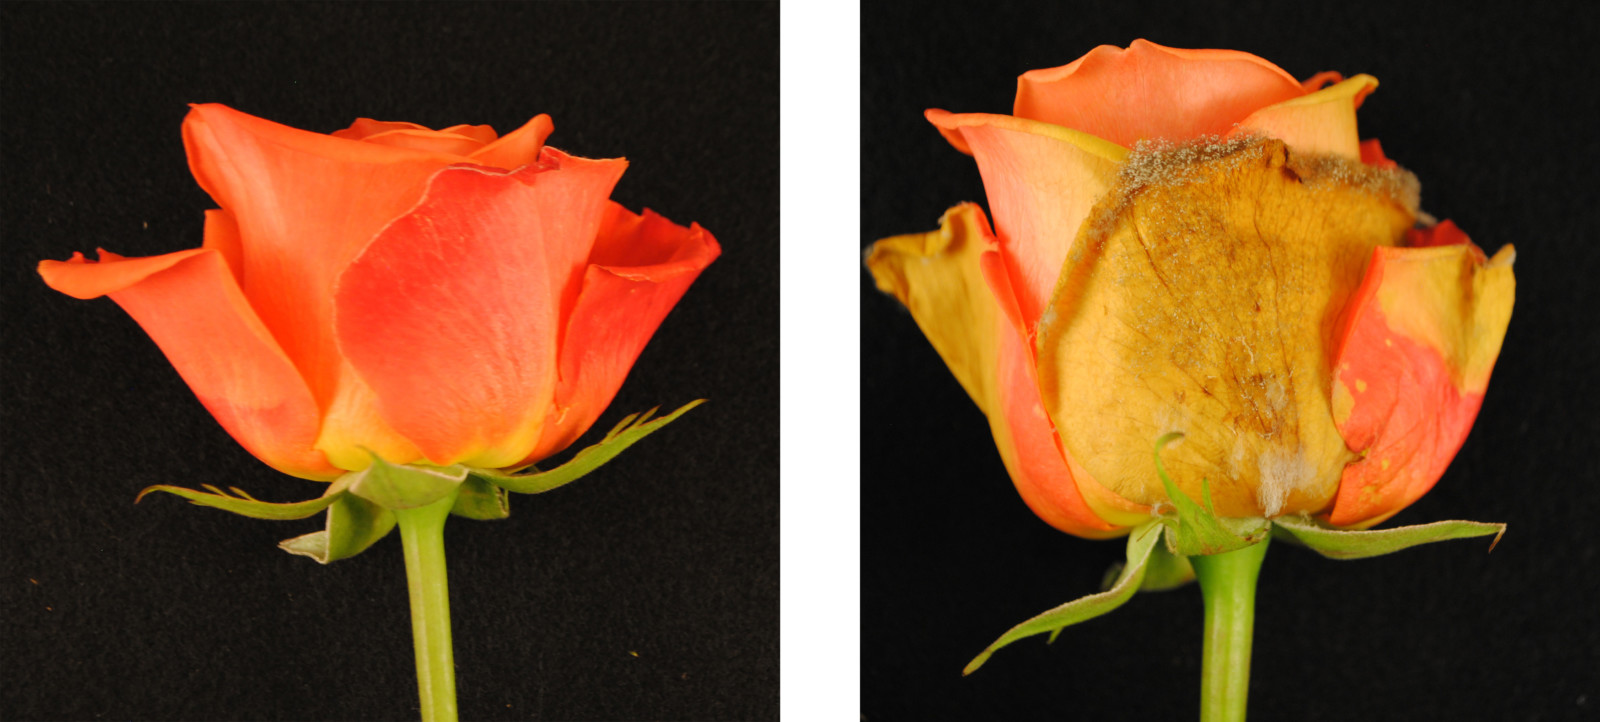 Healthy rose on left. Botrytis stricken rose on right.